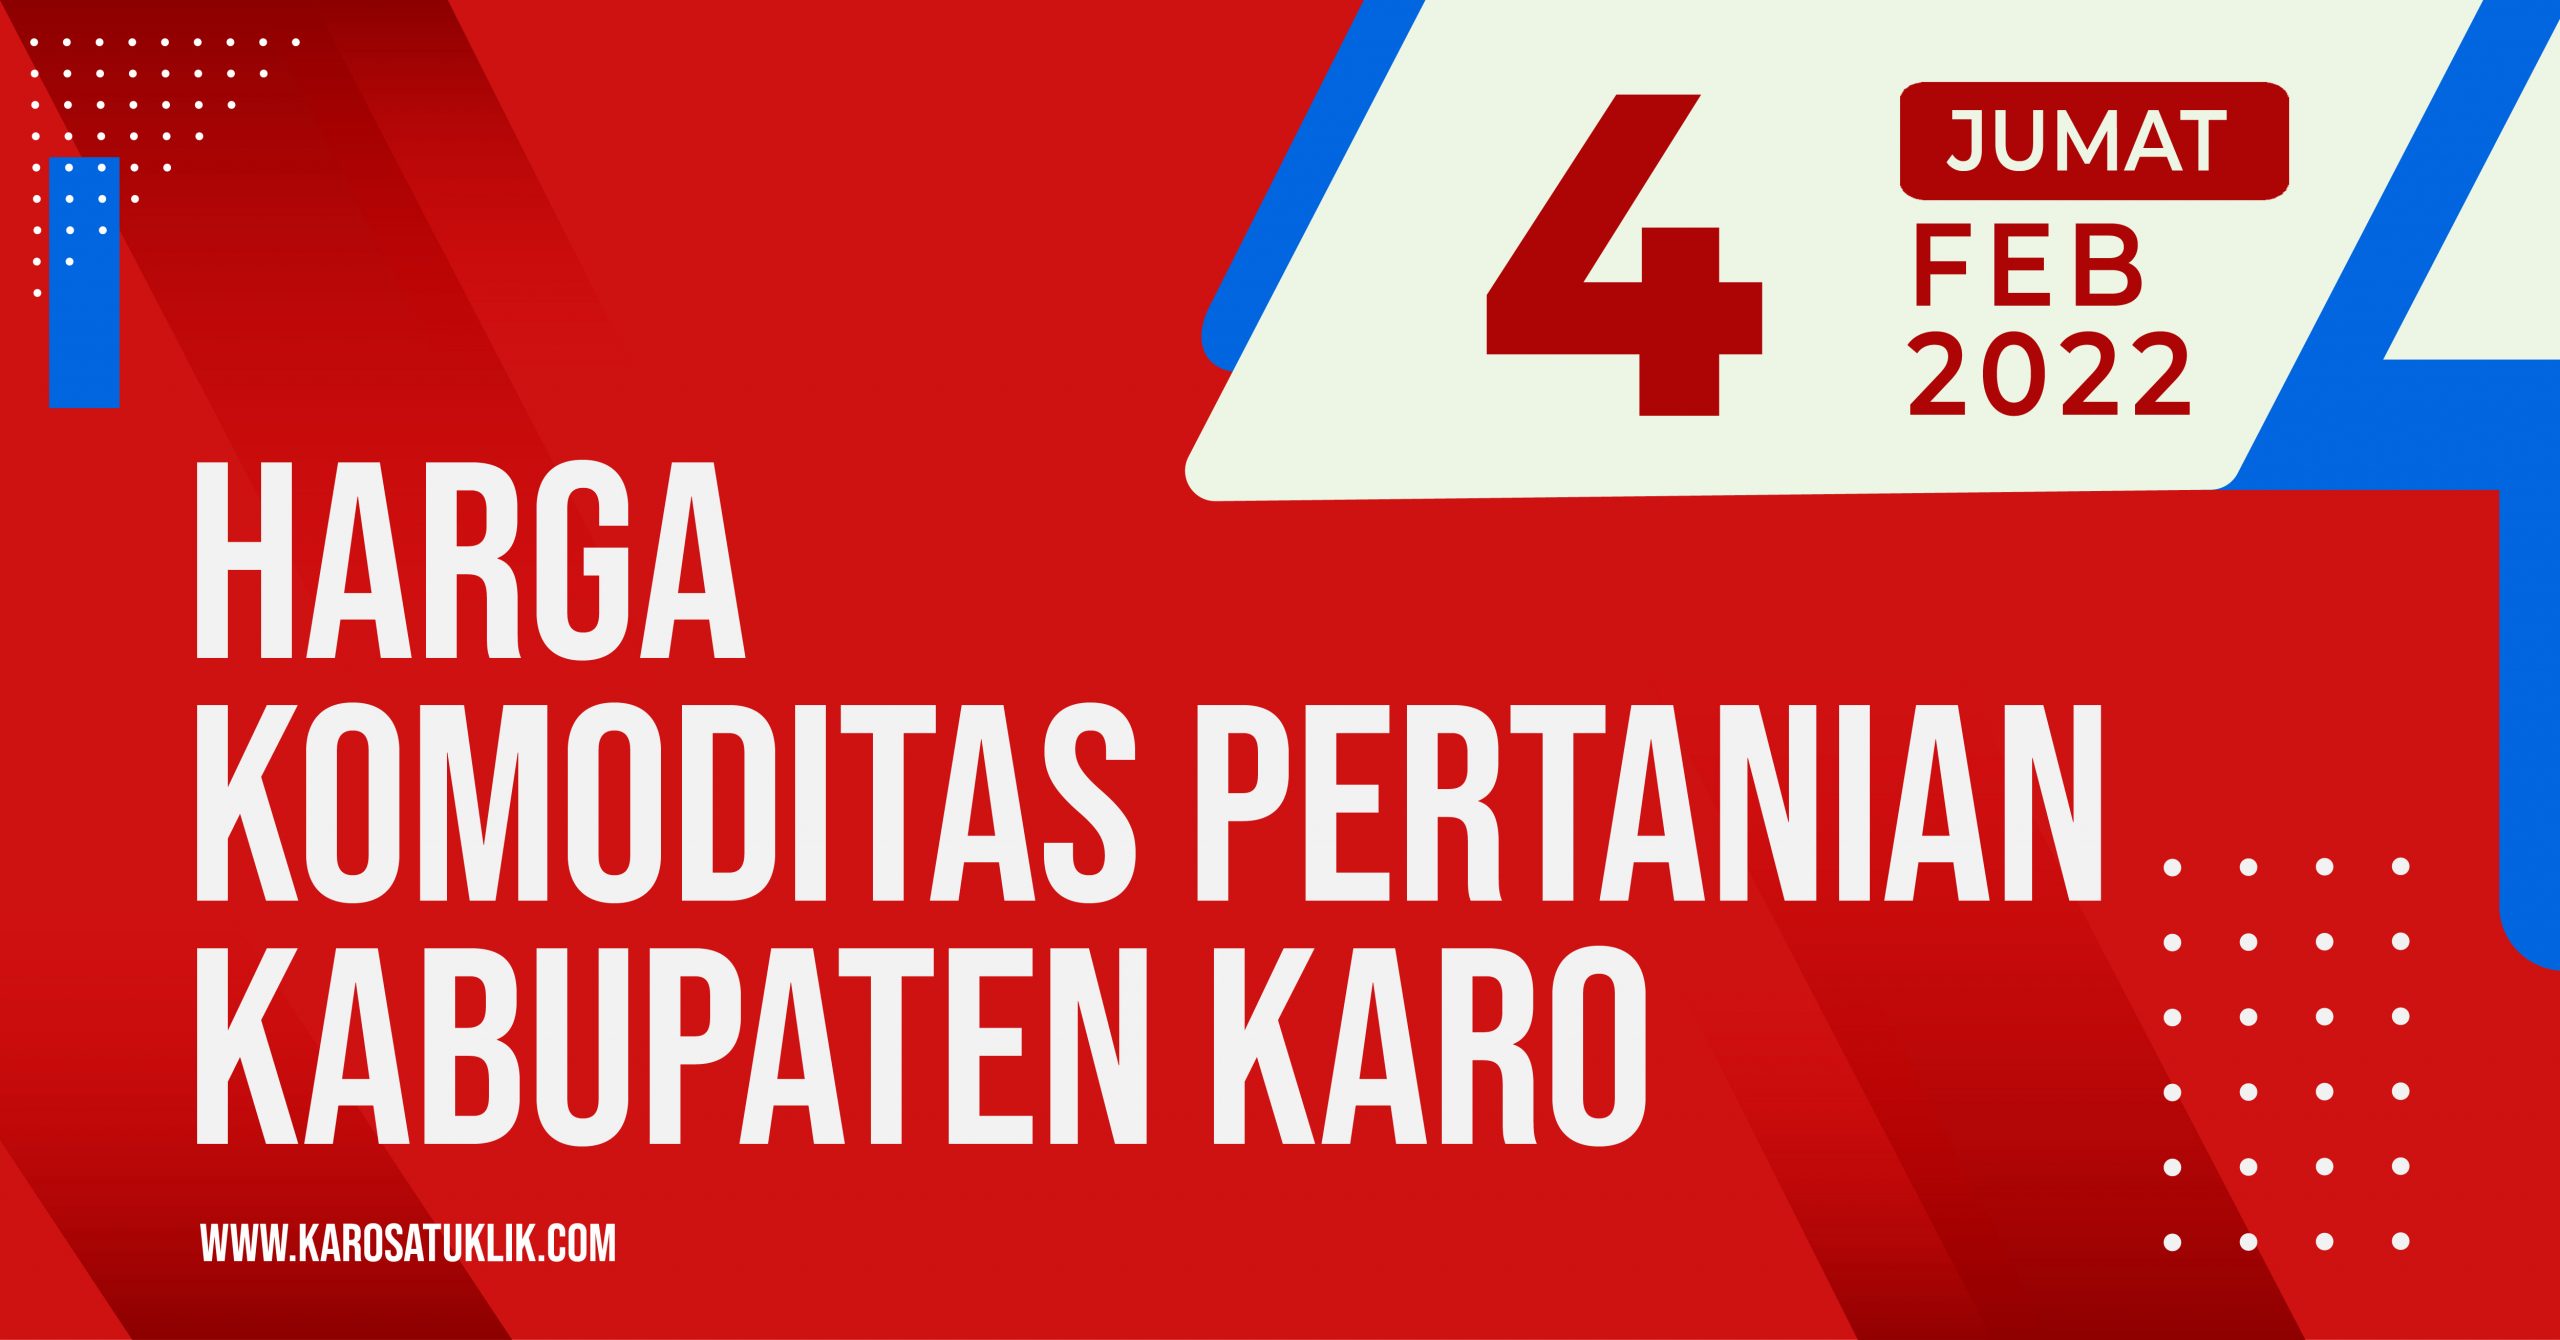 Daftar Harga Komoditas Pertanian Kabupaten Karo, 4 Februari 2022